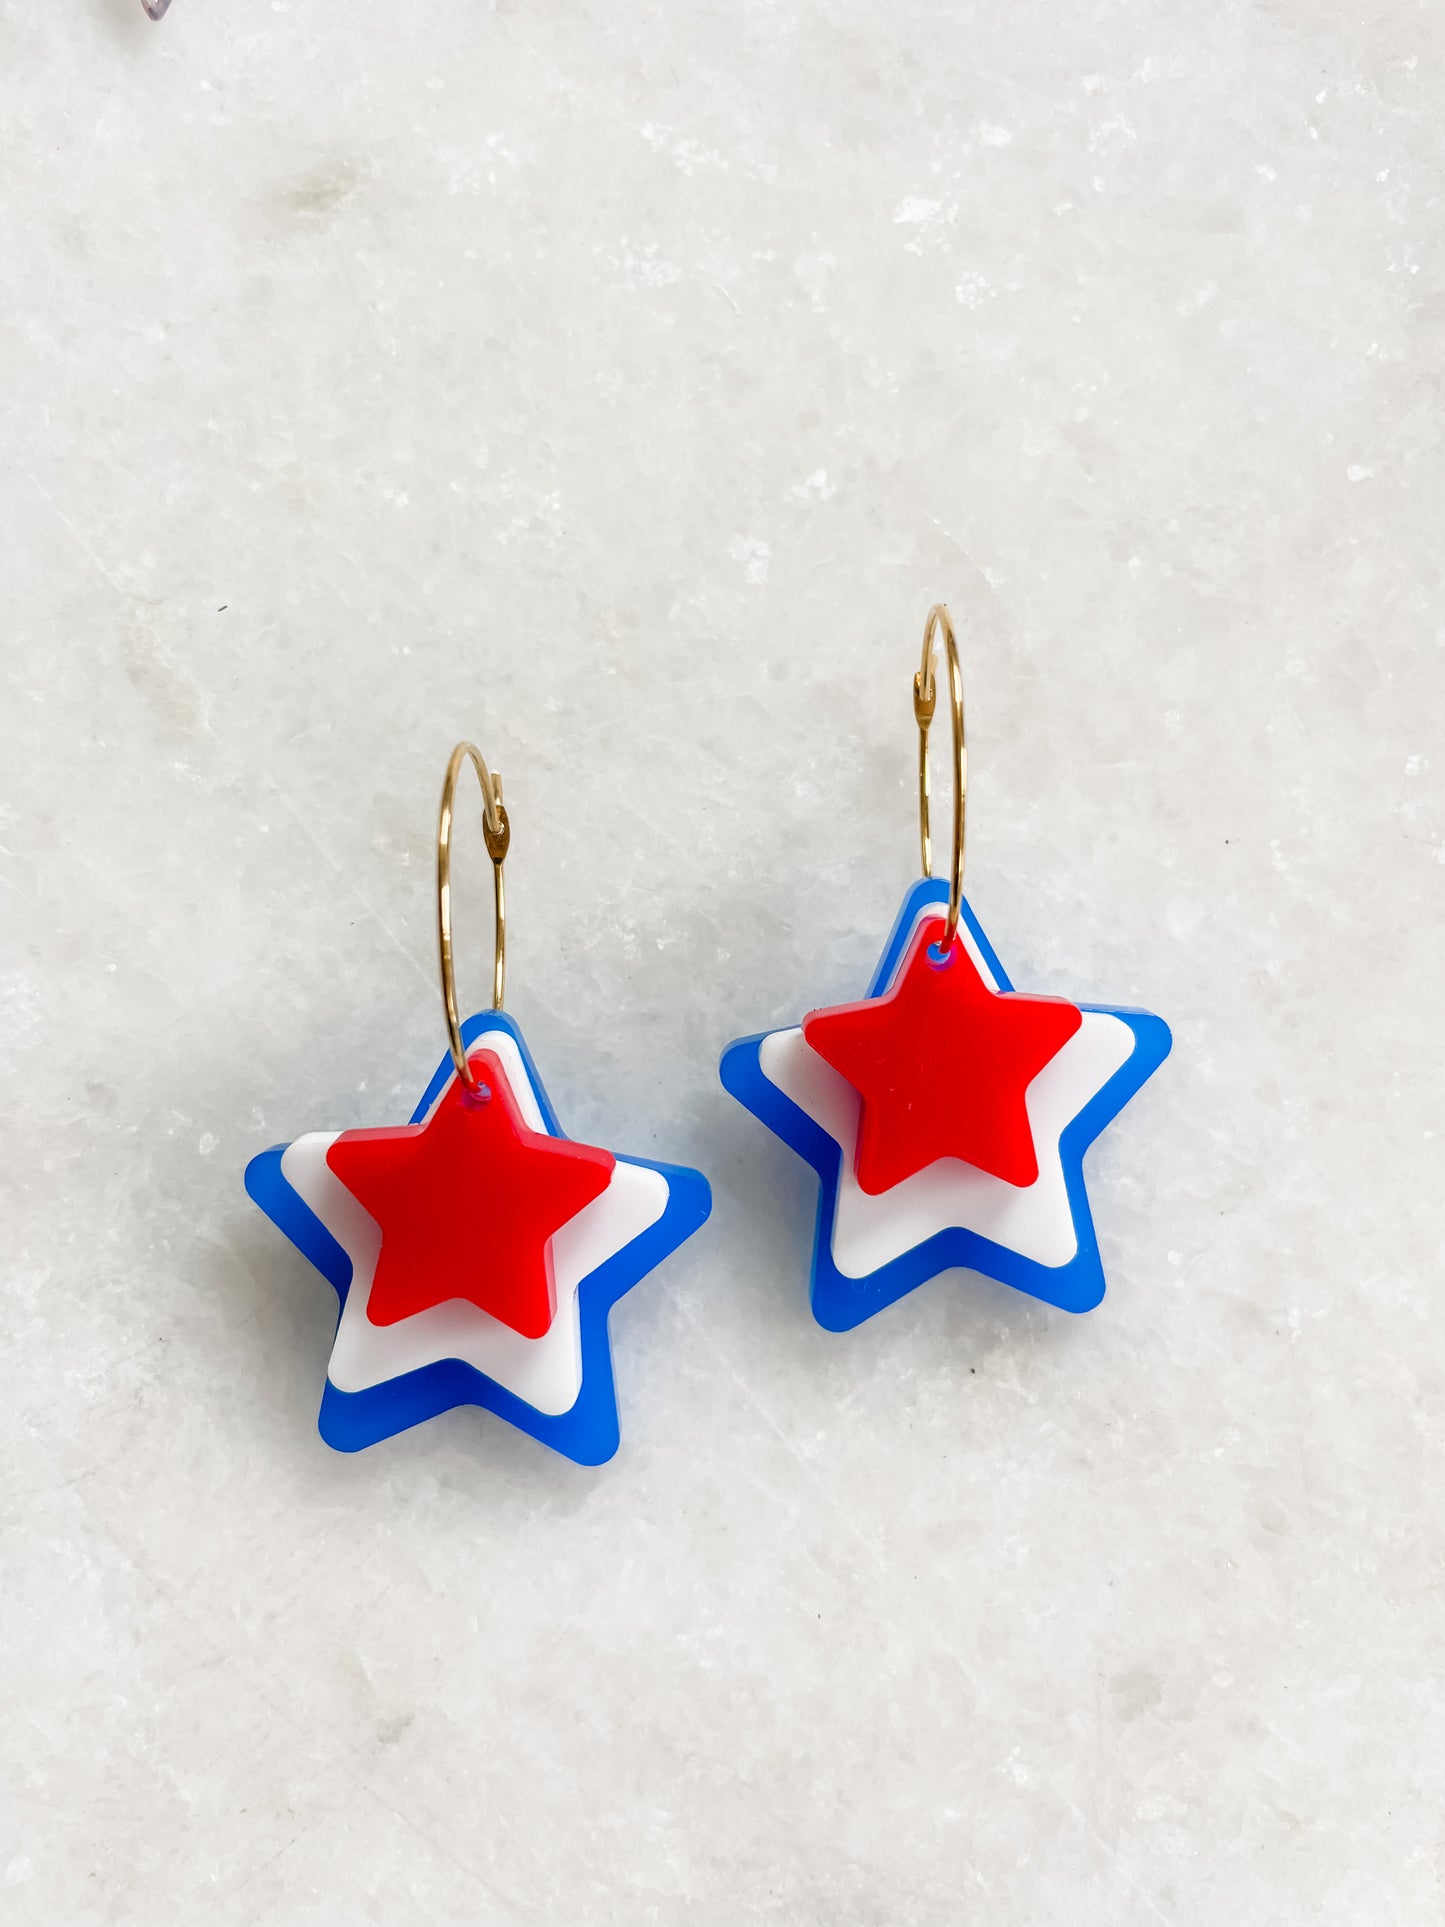 Stacked star earrings